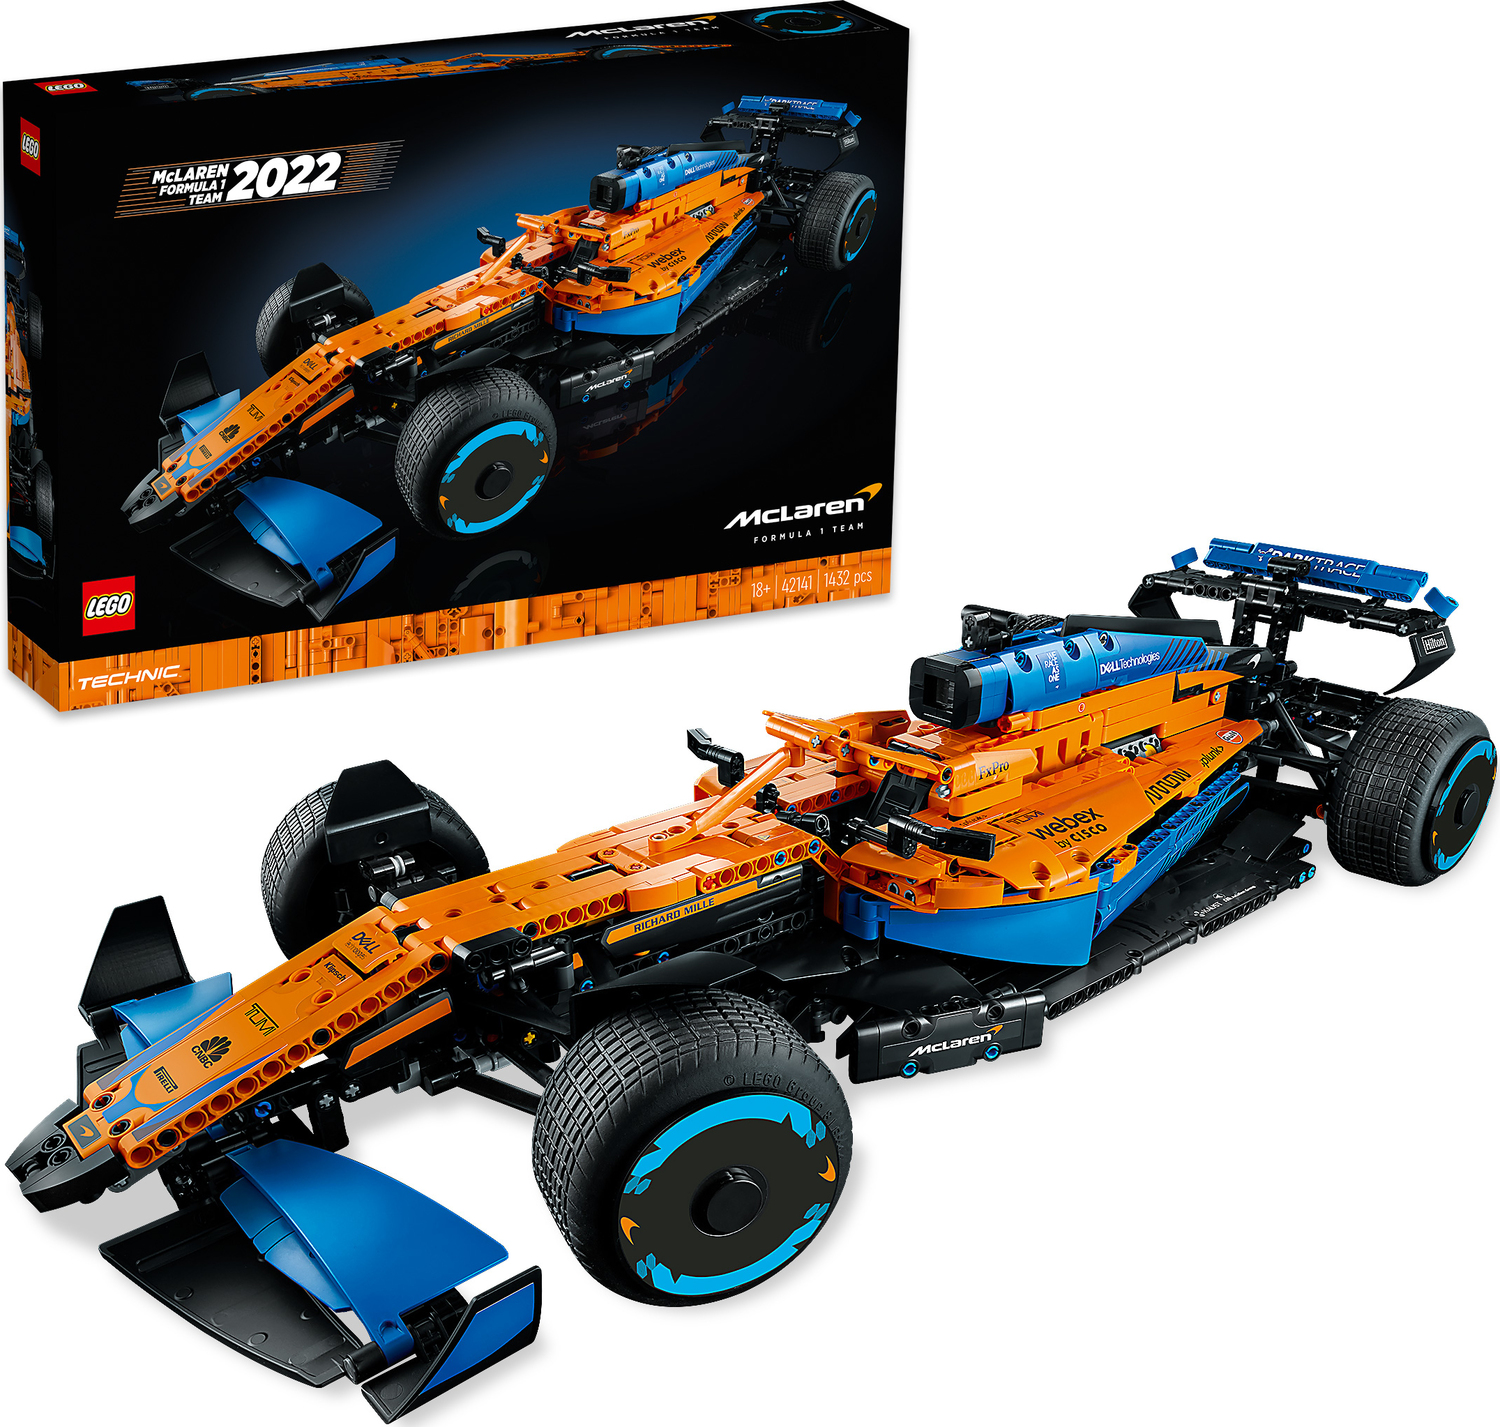 LEGO Technic McLaren Formula 1 Race Car - Imagine That Toys